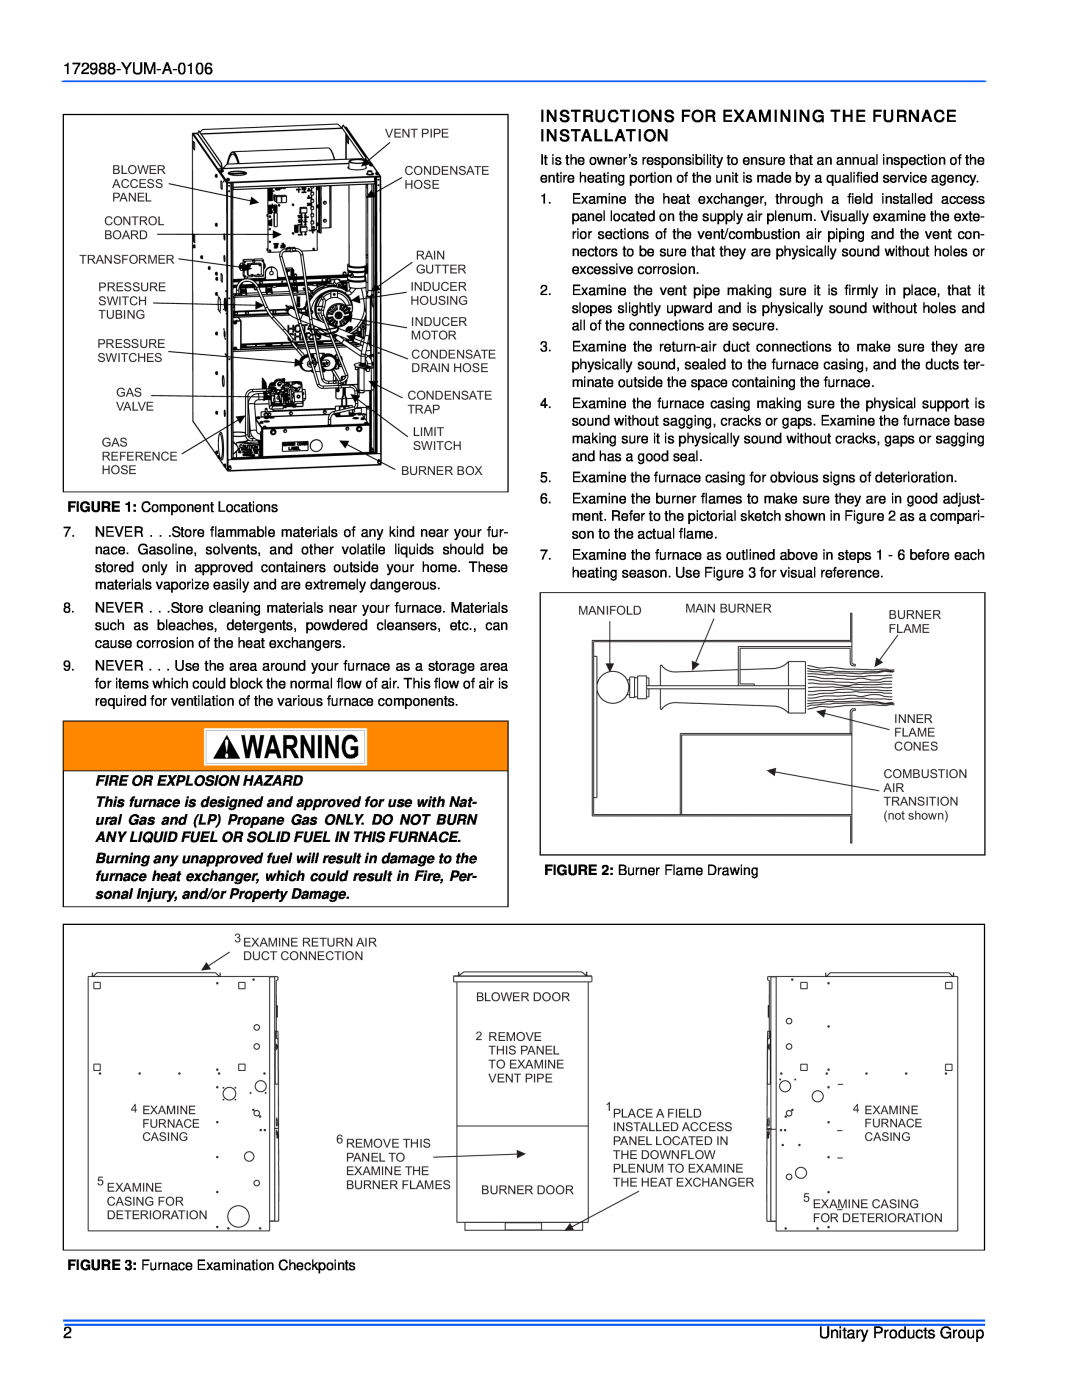 York PC9 service manual YUM-A-0106, Fire Or Explosion Hazard 